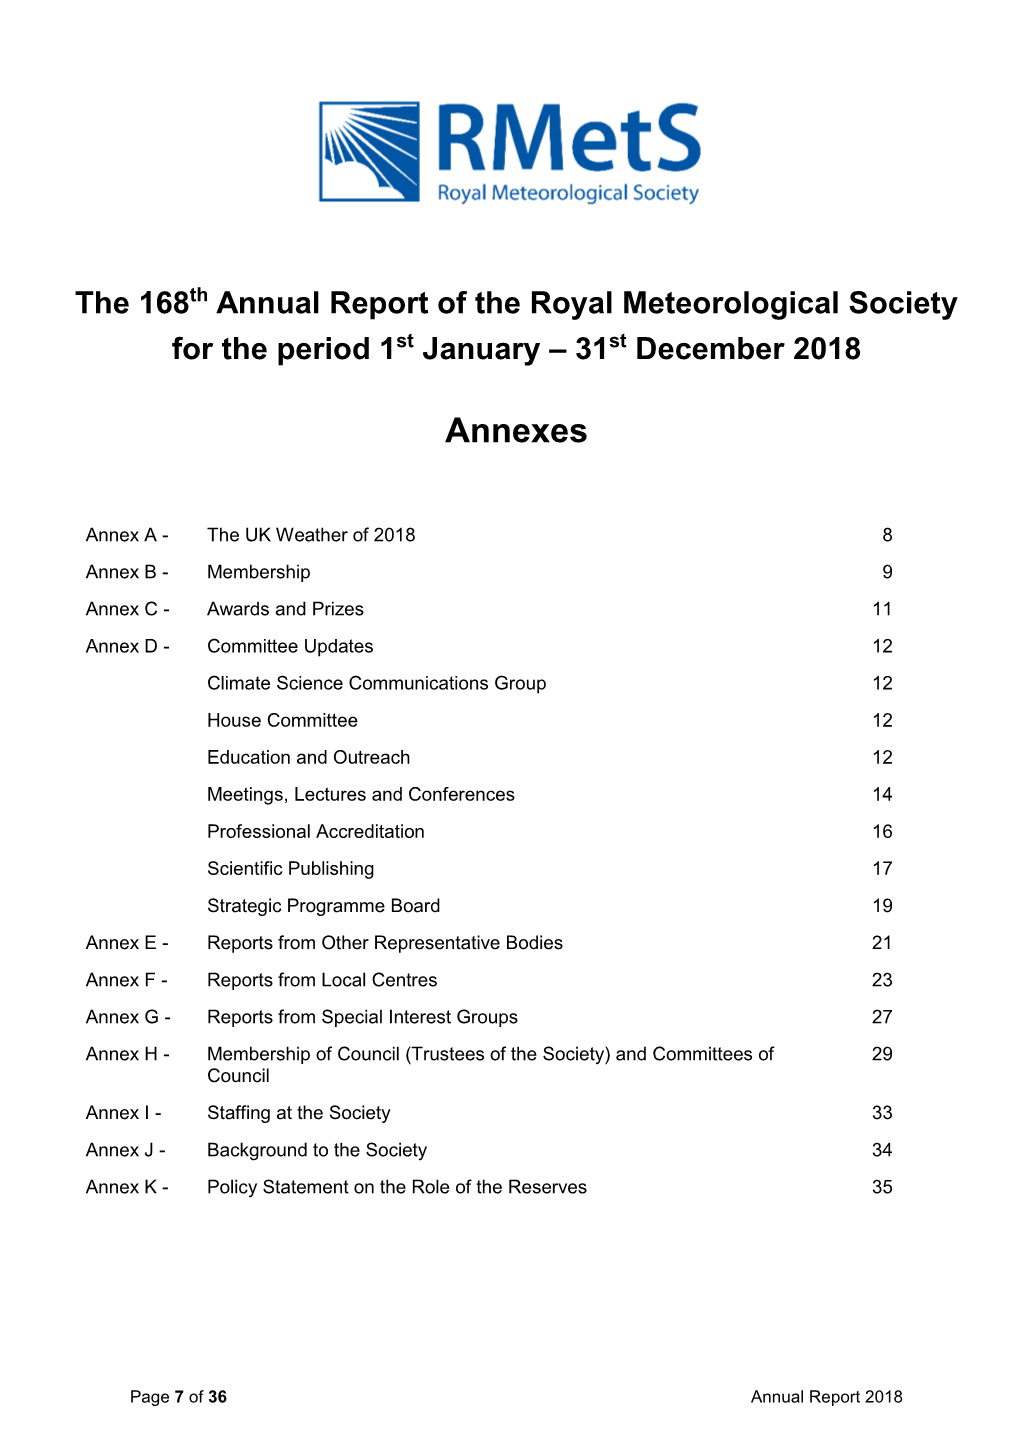 Annual Report Annexes 2018